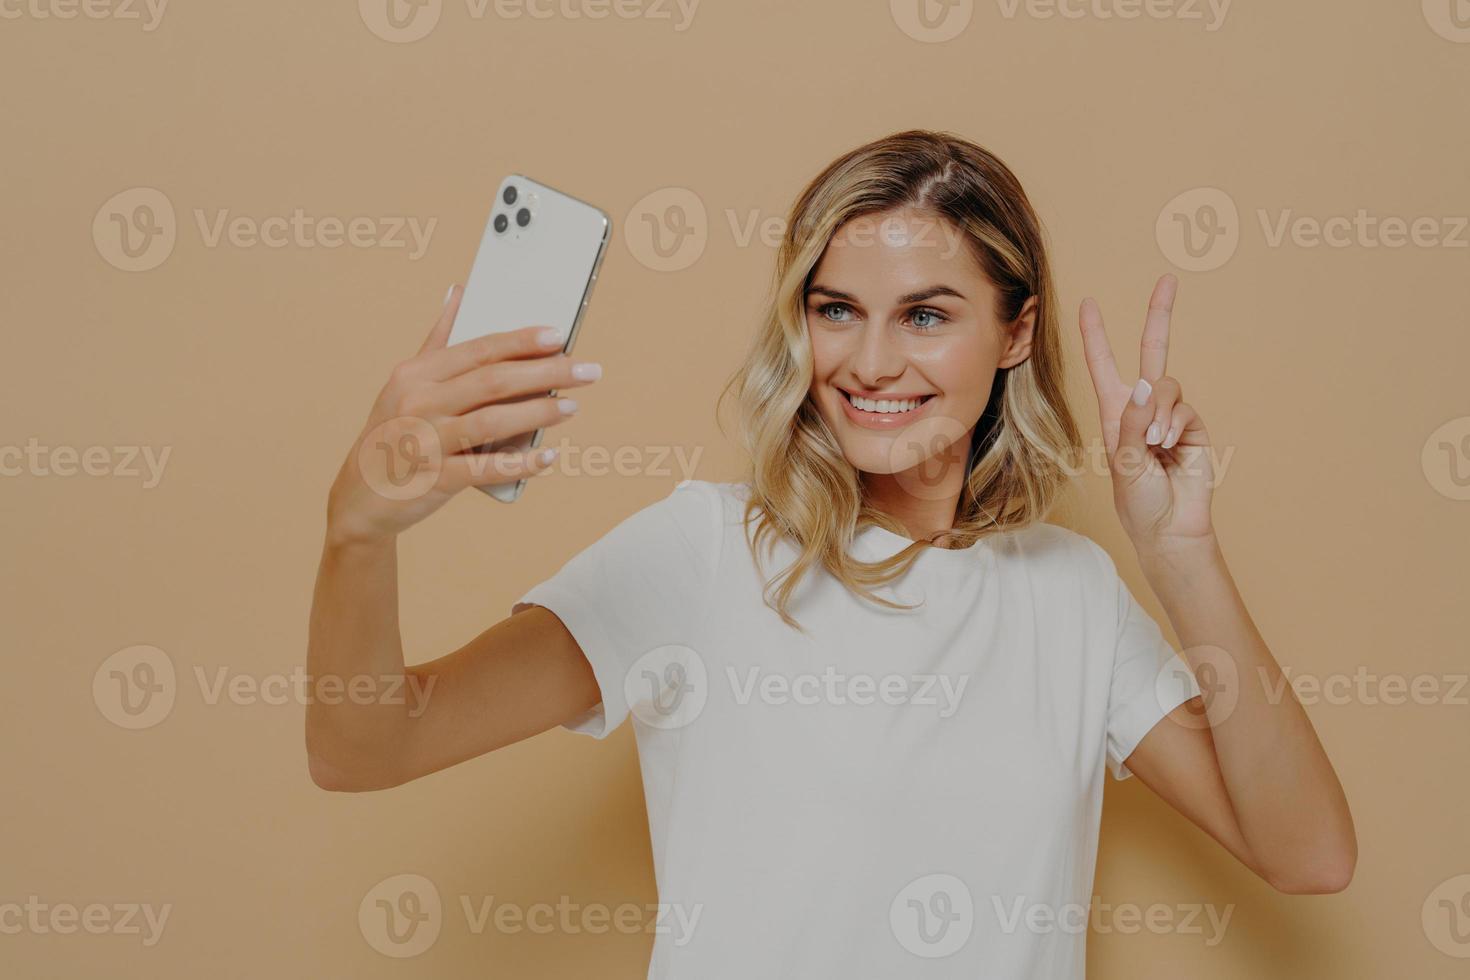 cool glad kvinna med blont hår med smartphone i handen gör selfie i studio mot naken bakgrund foto